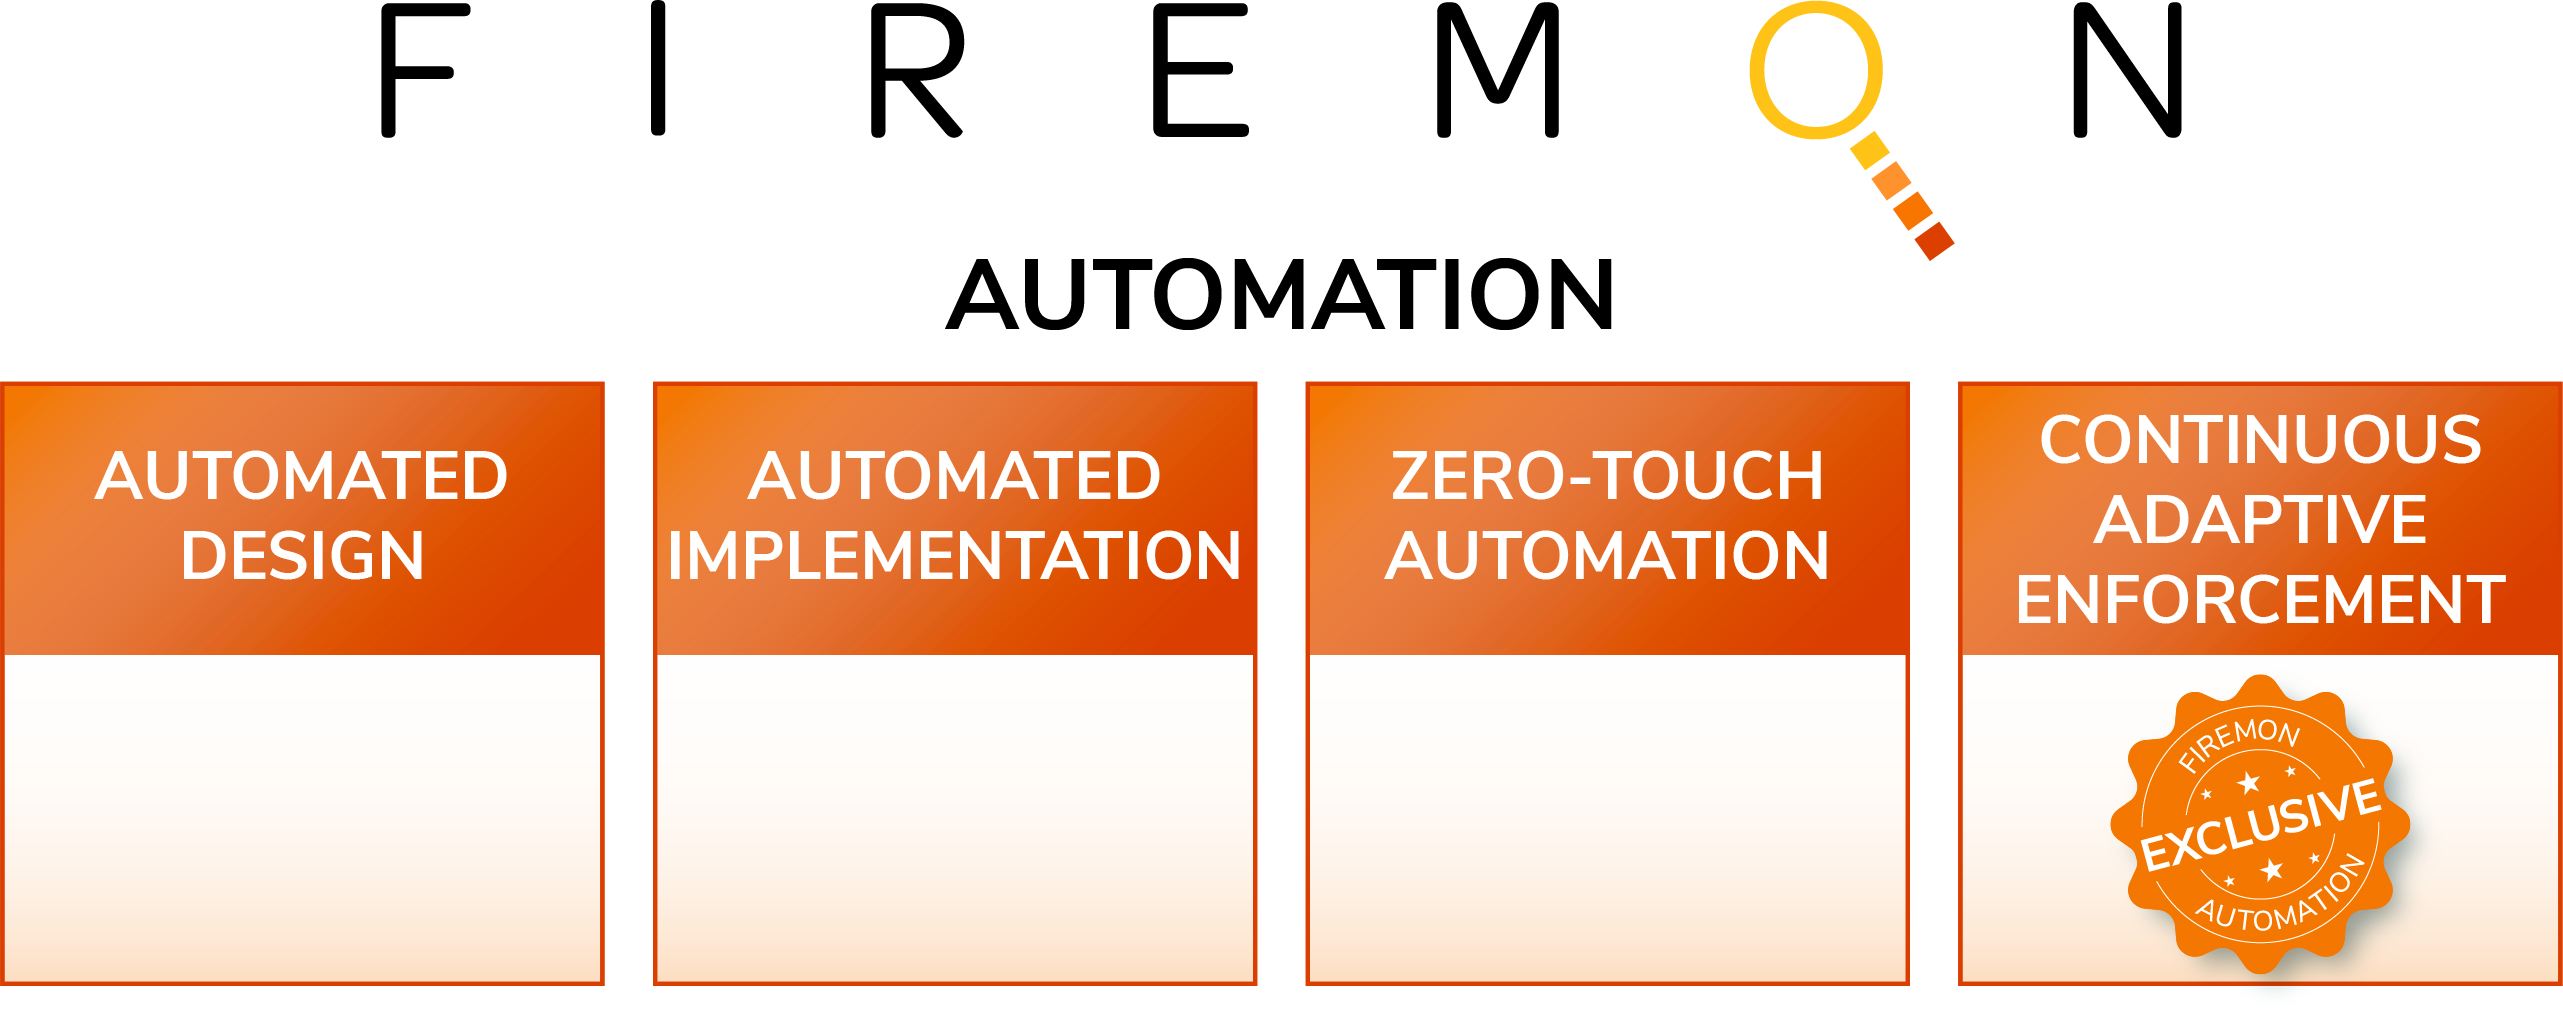 FireMon_Automation